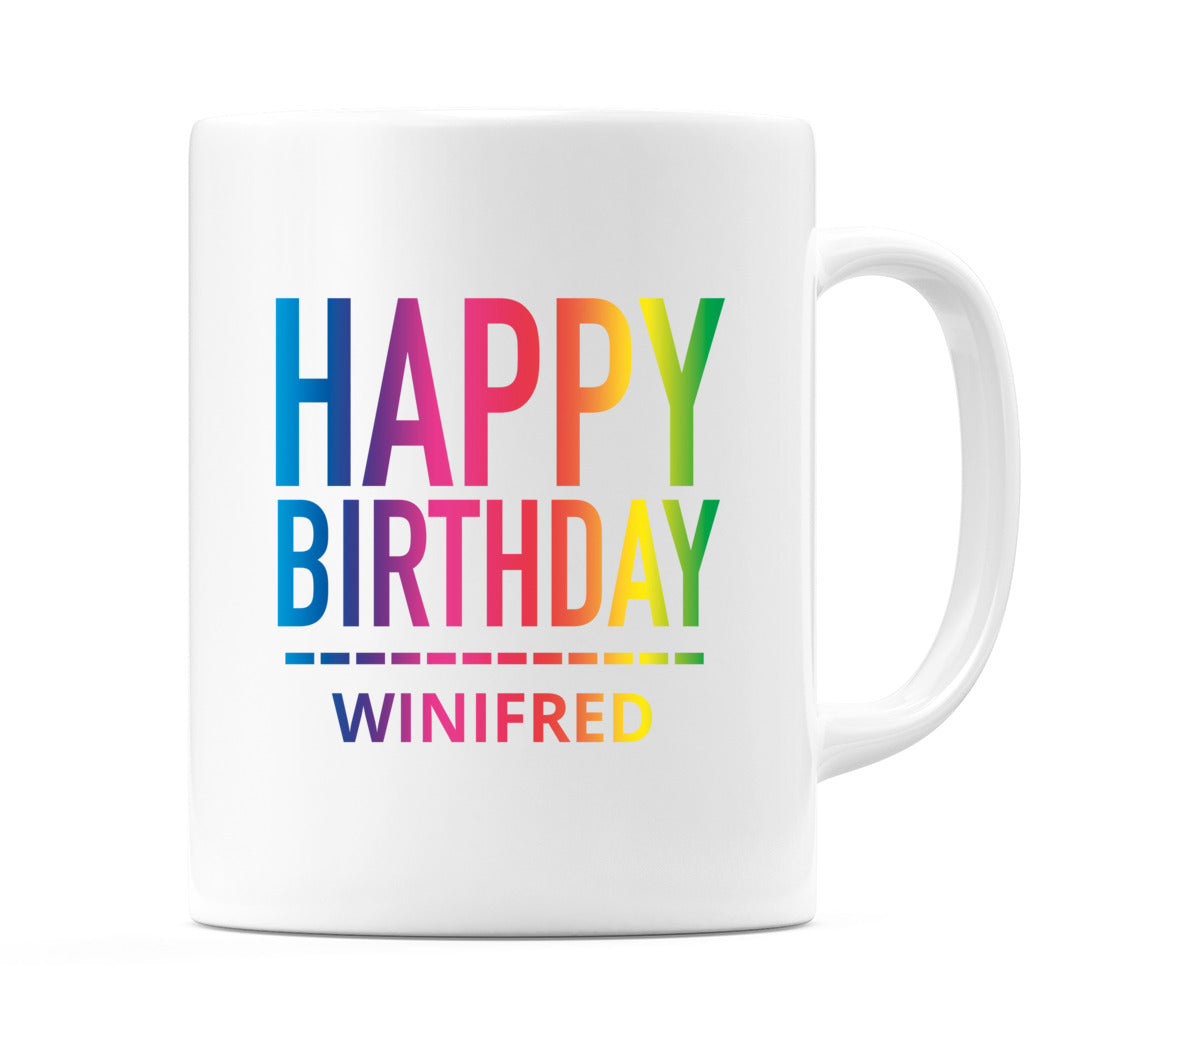 Happy Birthday Winifred (Rainbow) Mug Cup by WeDoMugs